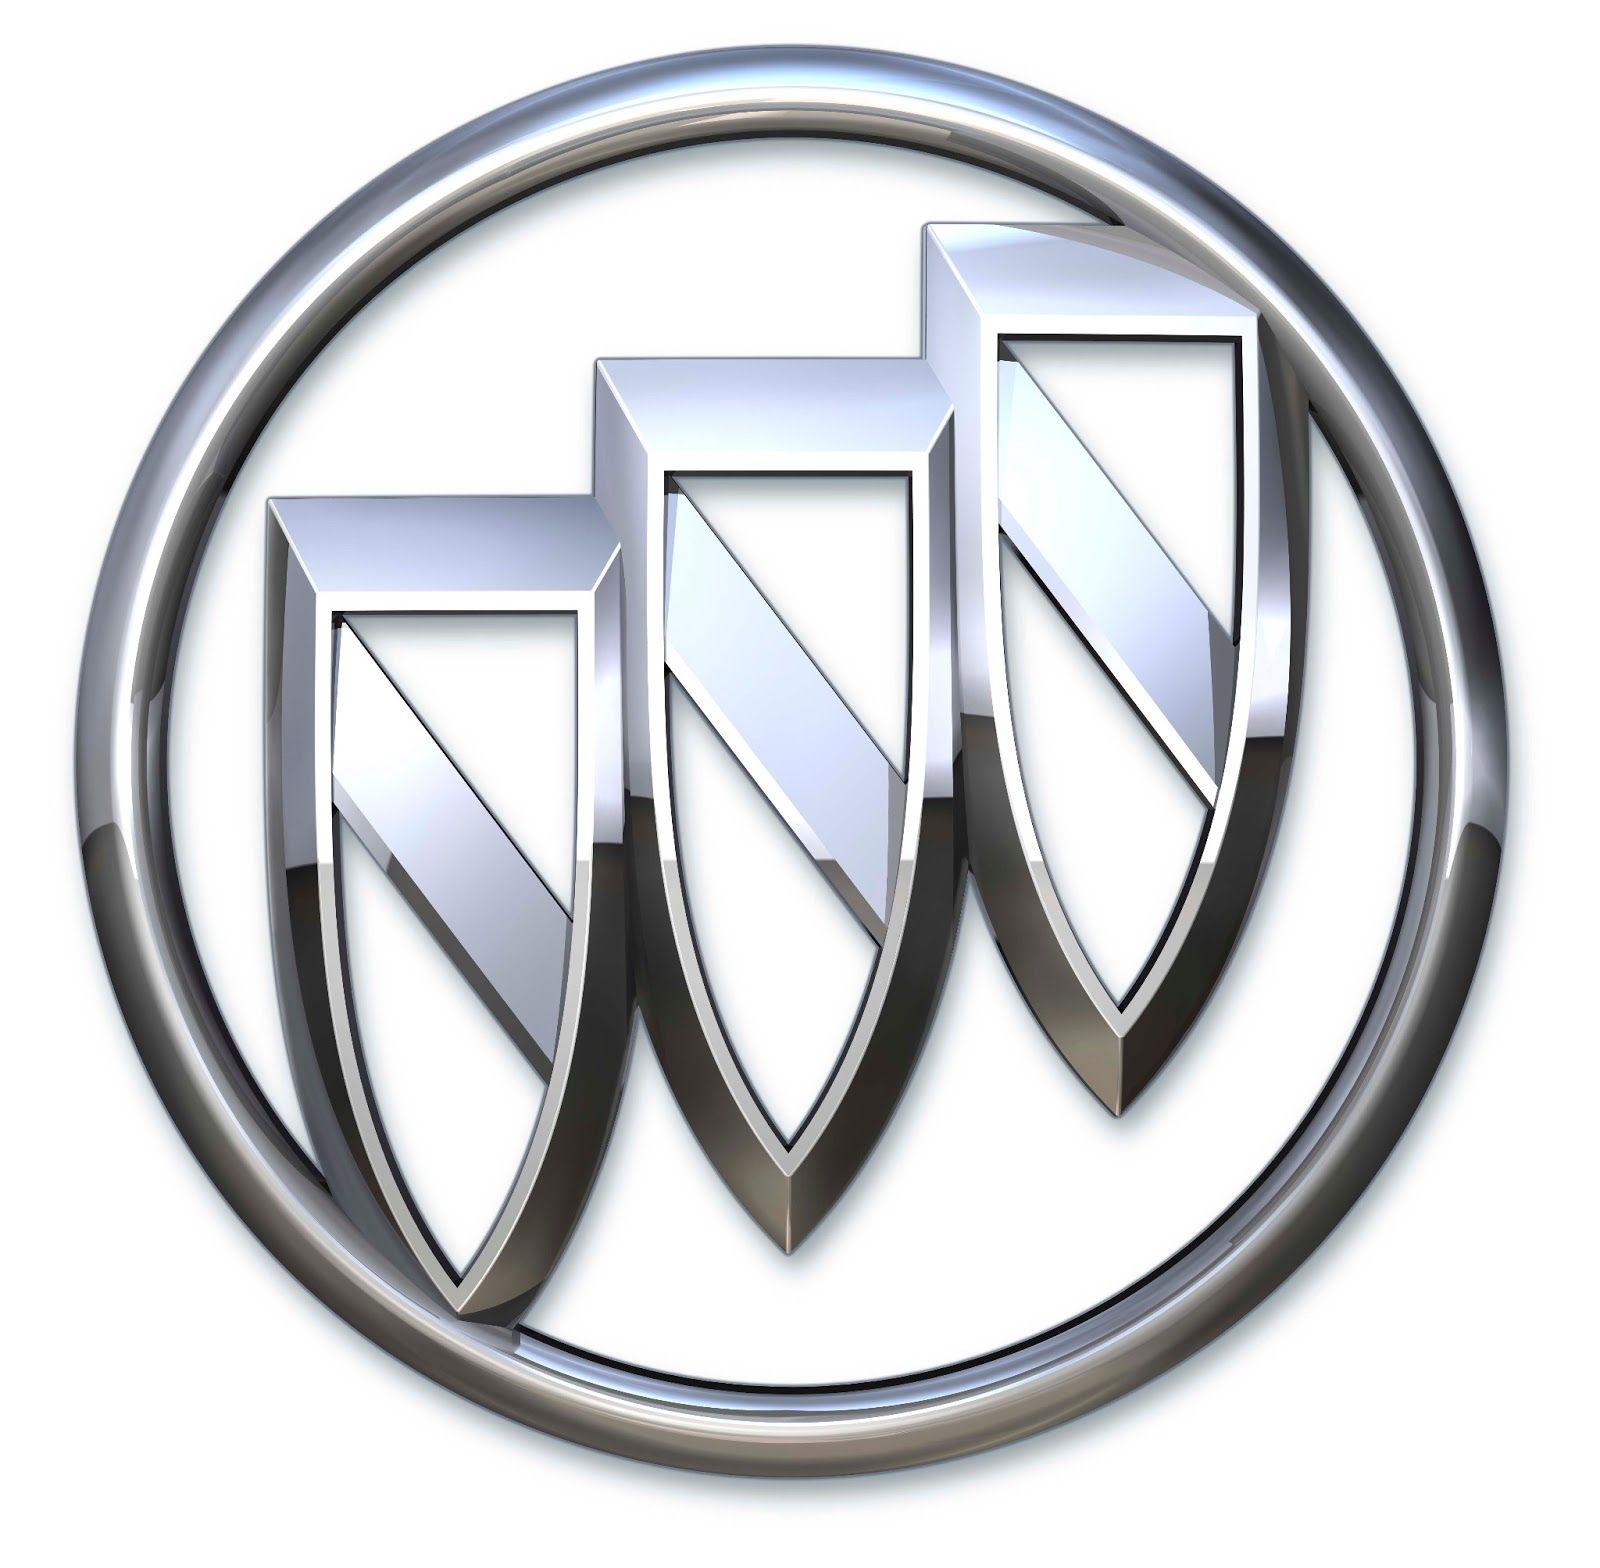 Grey Car Logo - Buick Logo, Buick Car Symbol Meaning and History | Car Brand Names.com